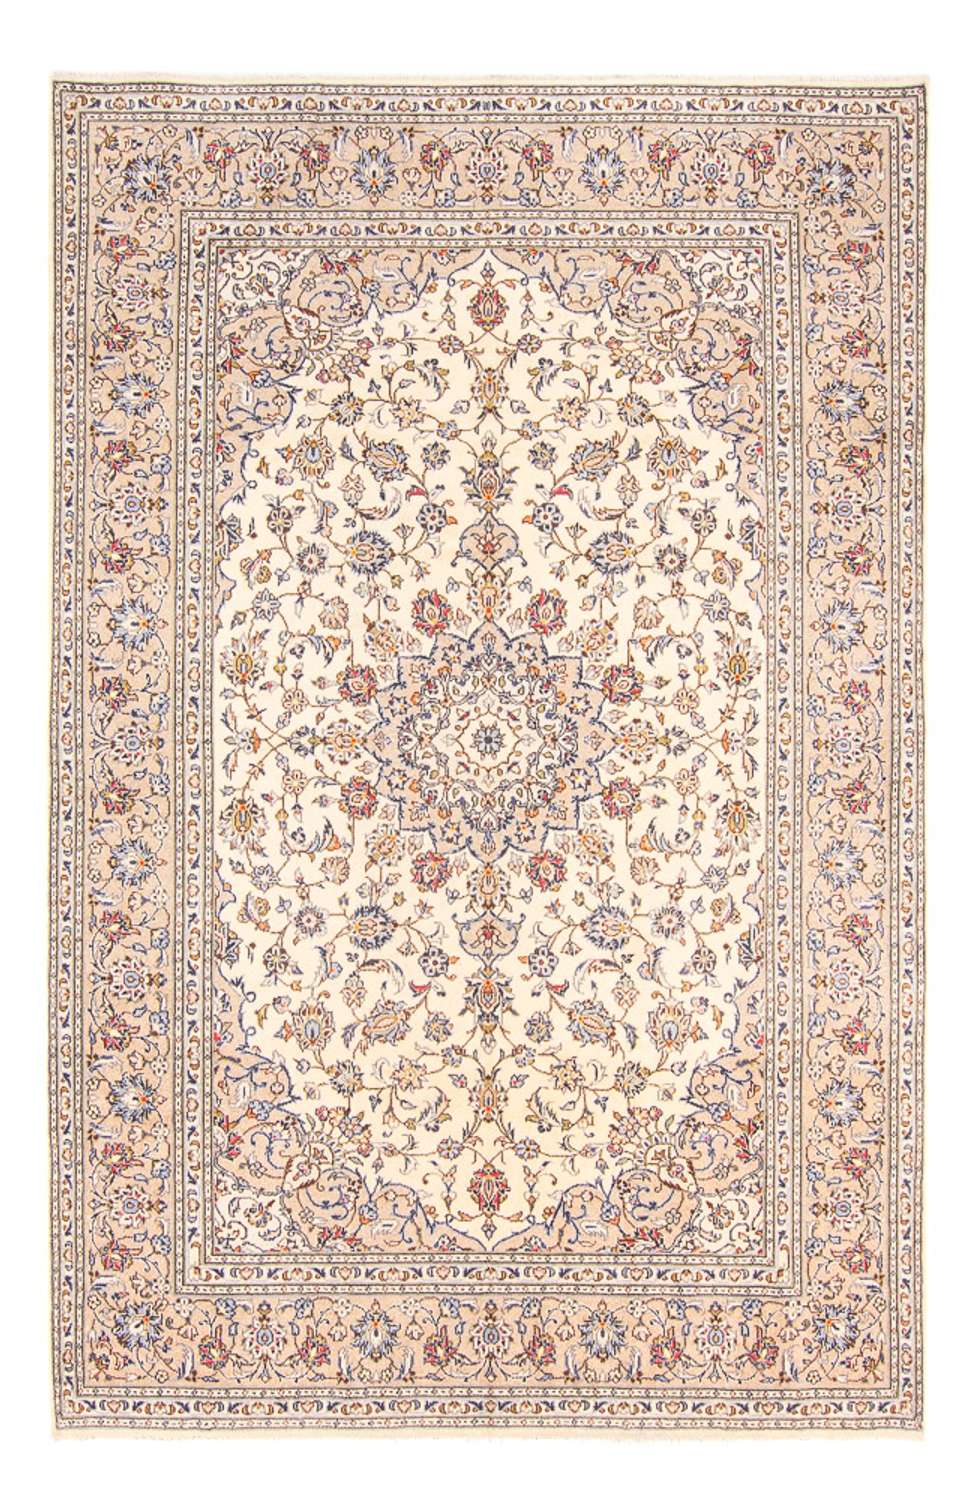 Persiska mattor - Keshan - 274 x 197 cm - grädde